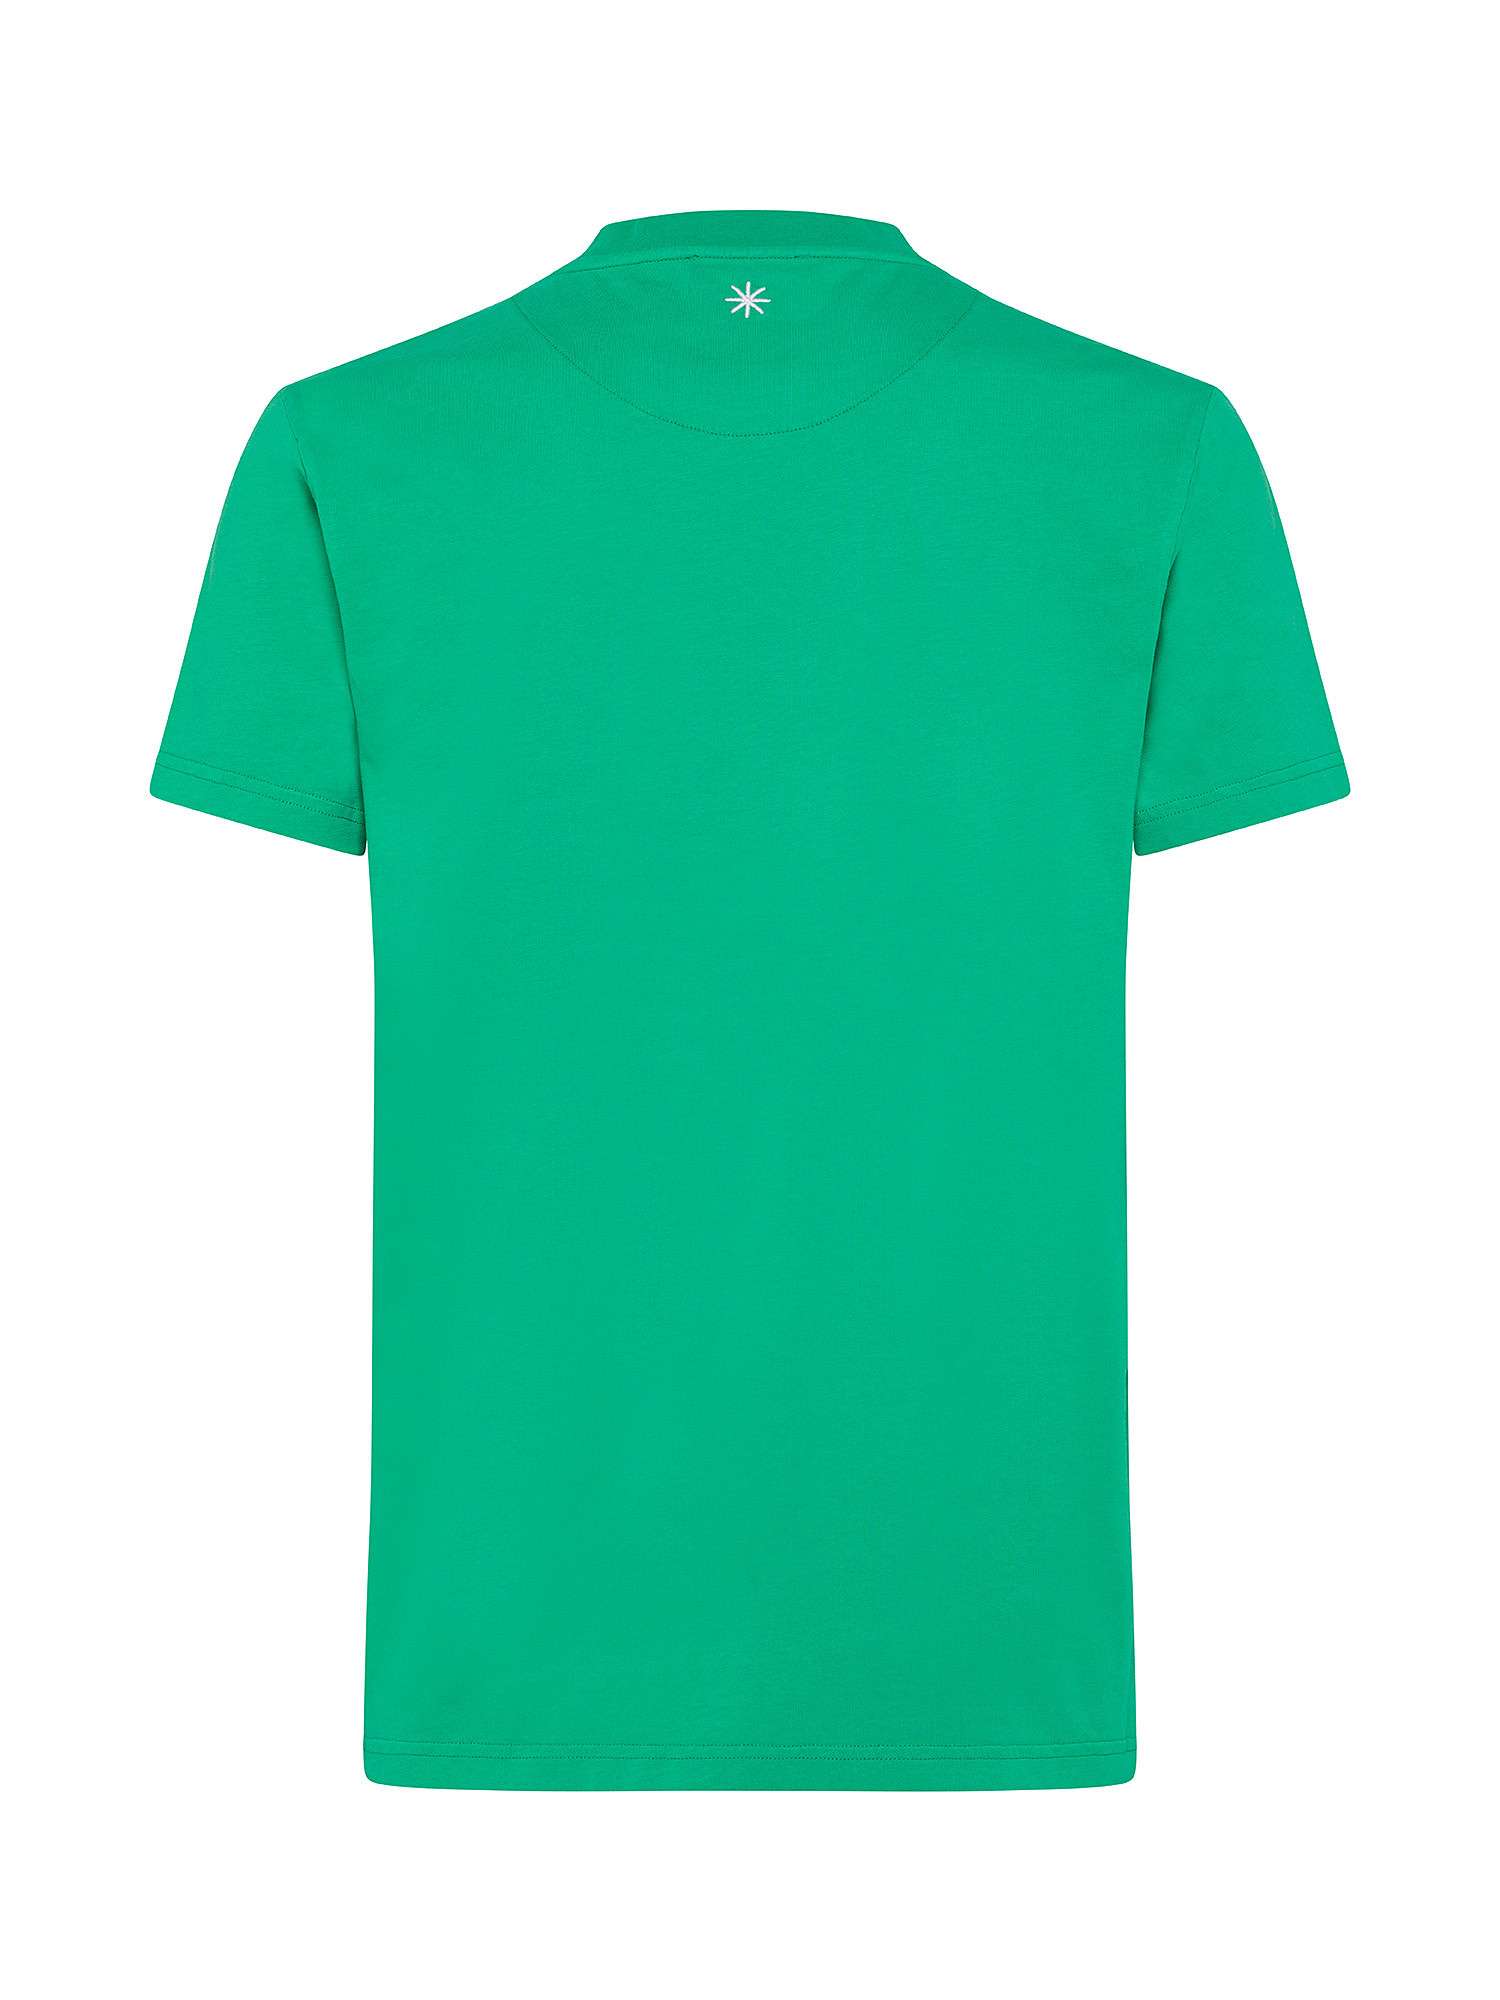 Manuel Ritz - Cotton T-shirt, Green, large image number 1